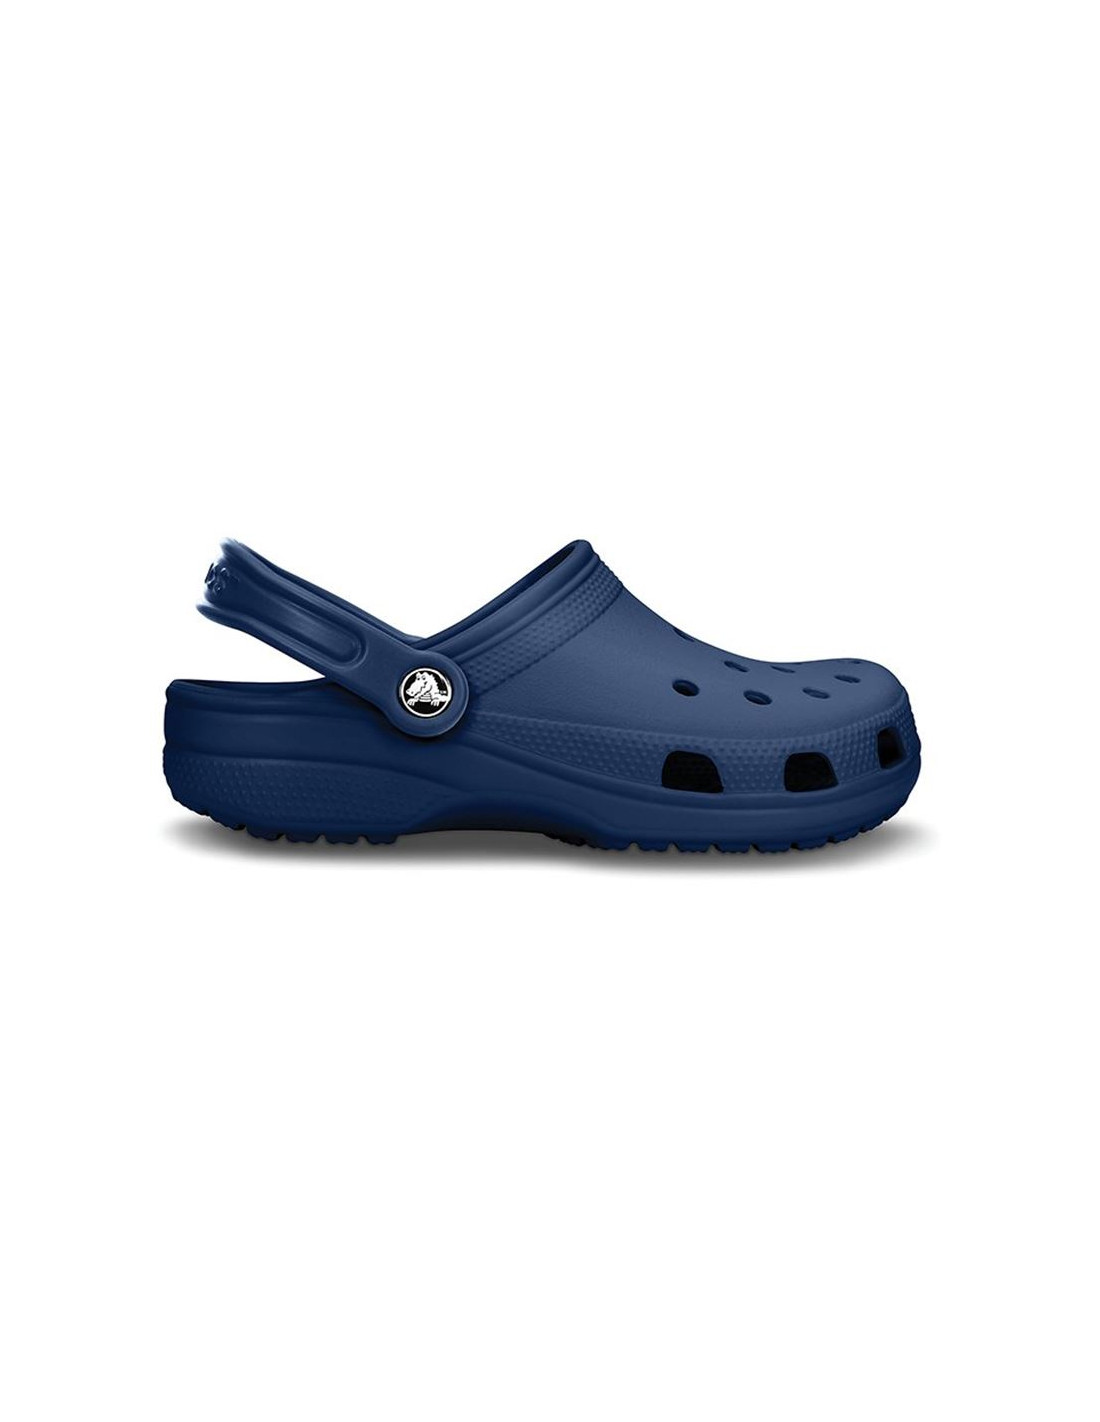 Zuecos crocs classic dark blue